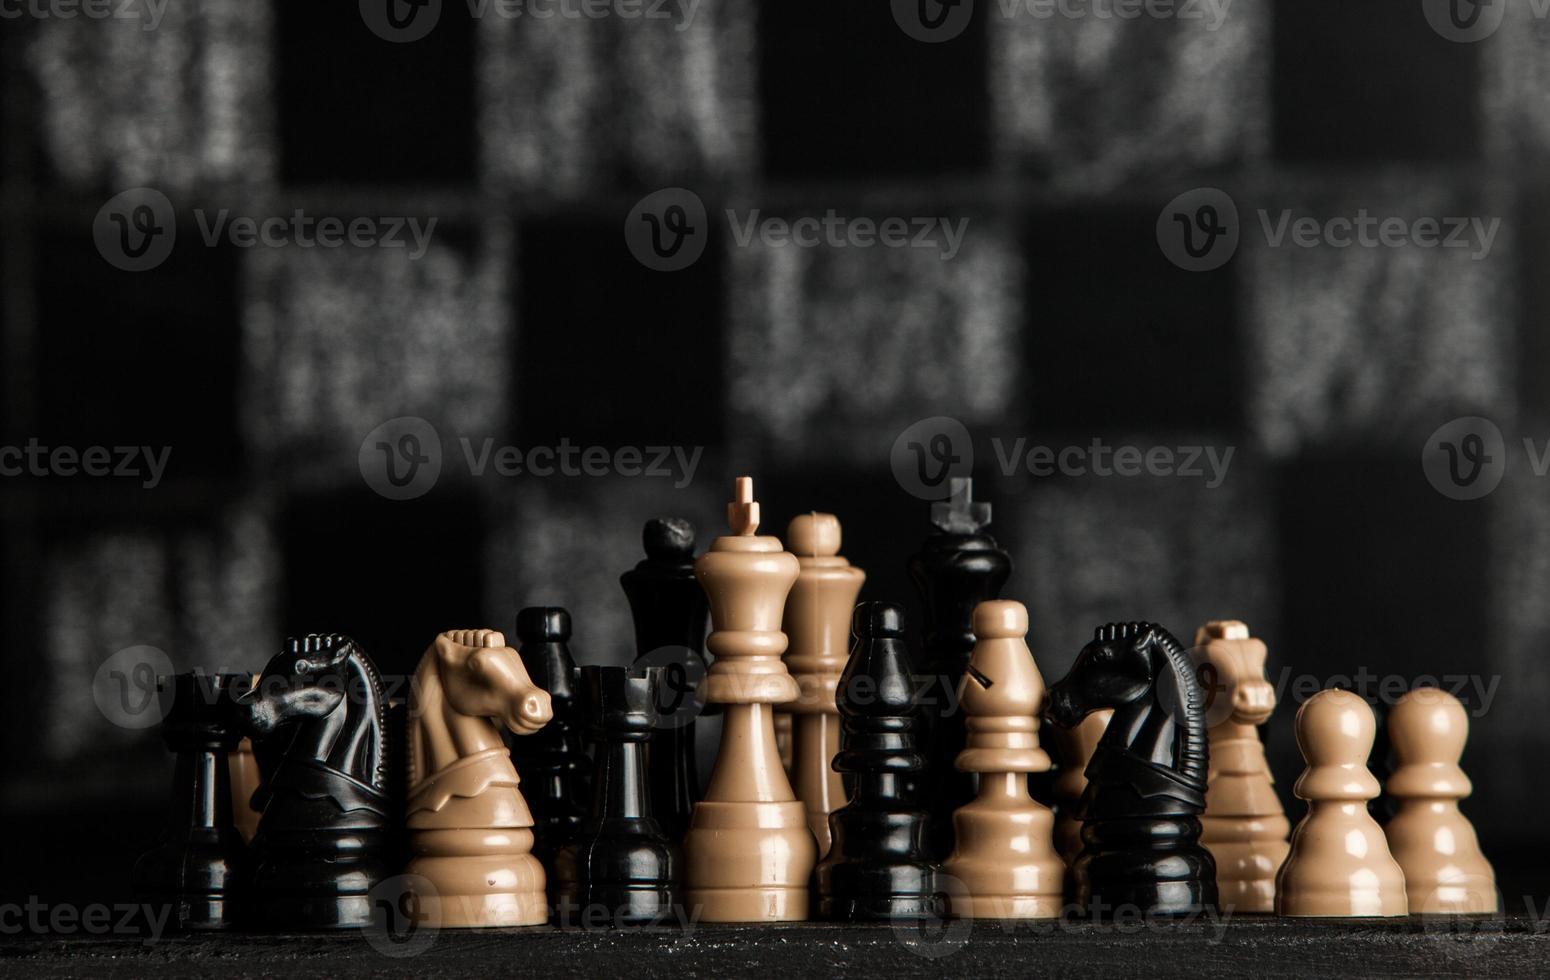 Jogo de Xadrez para além do xeque mate